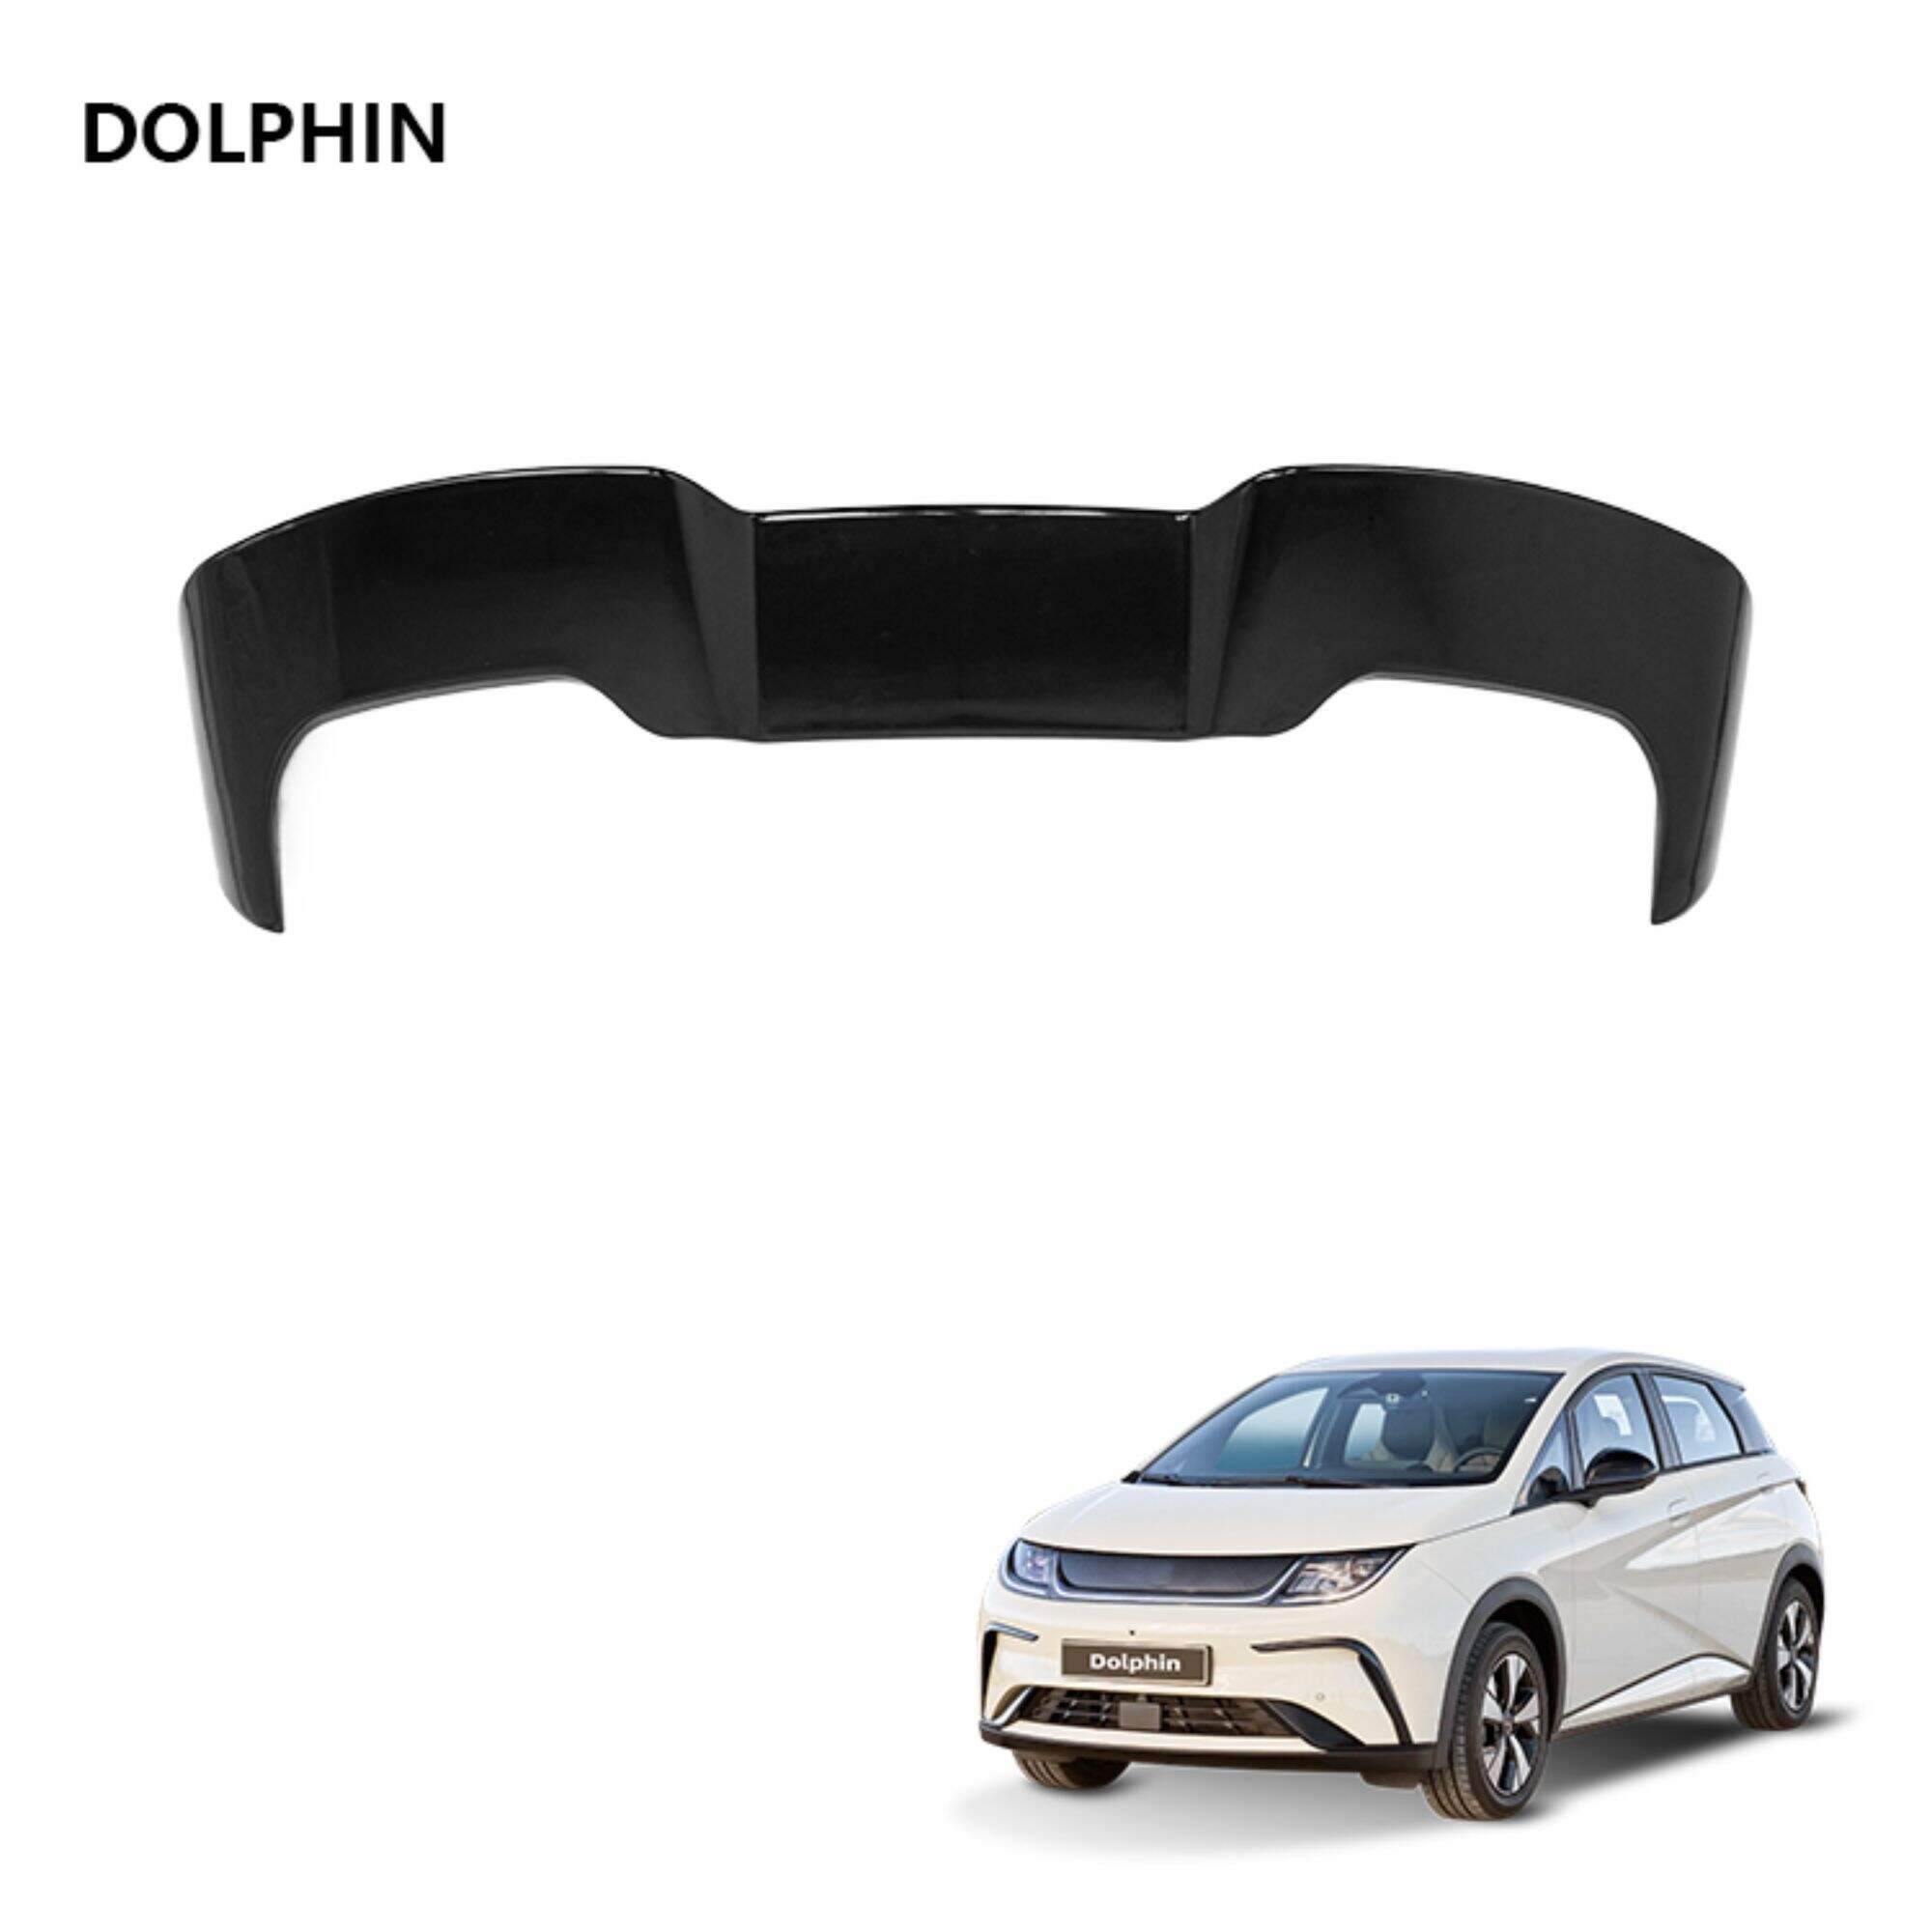 Dolphin ไฟฟ้ารถยนต์อุปกรณ์เสริมภายนอกรูปแบบคาร์บอนไฟเบอร์ Workblank Trunk สปอยเลอร์ Universal รถด้านหลังสปอยเลอร์สำหรับ BYD Dolphin